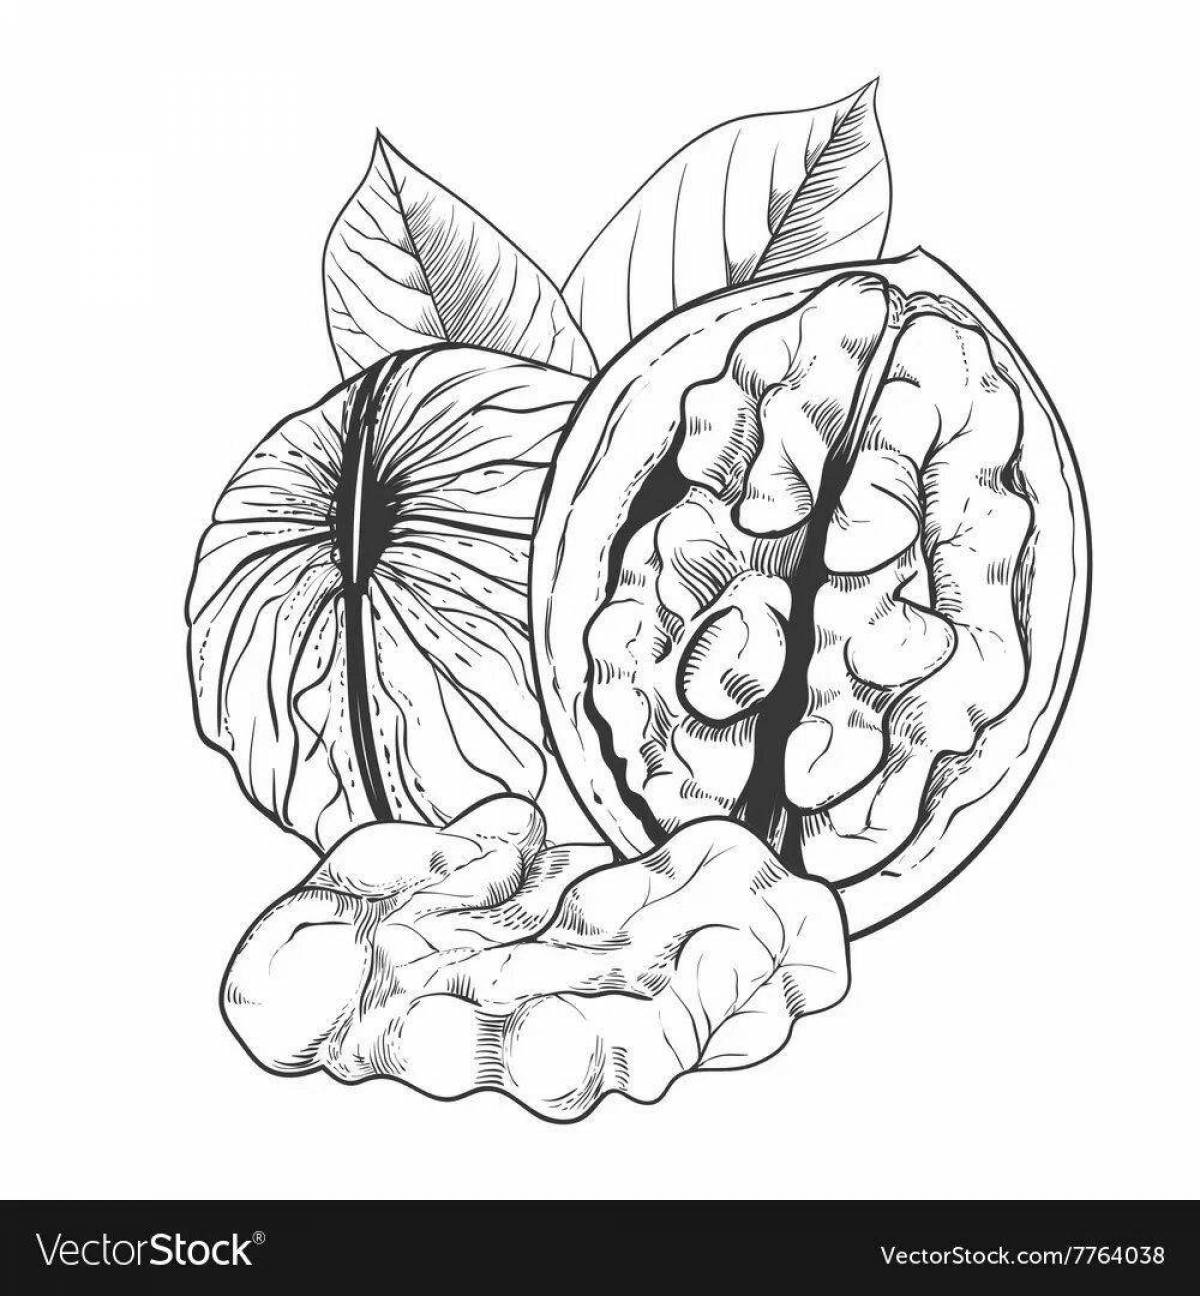 Joyful walnut coloring page